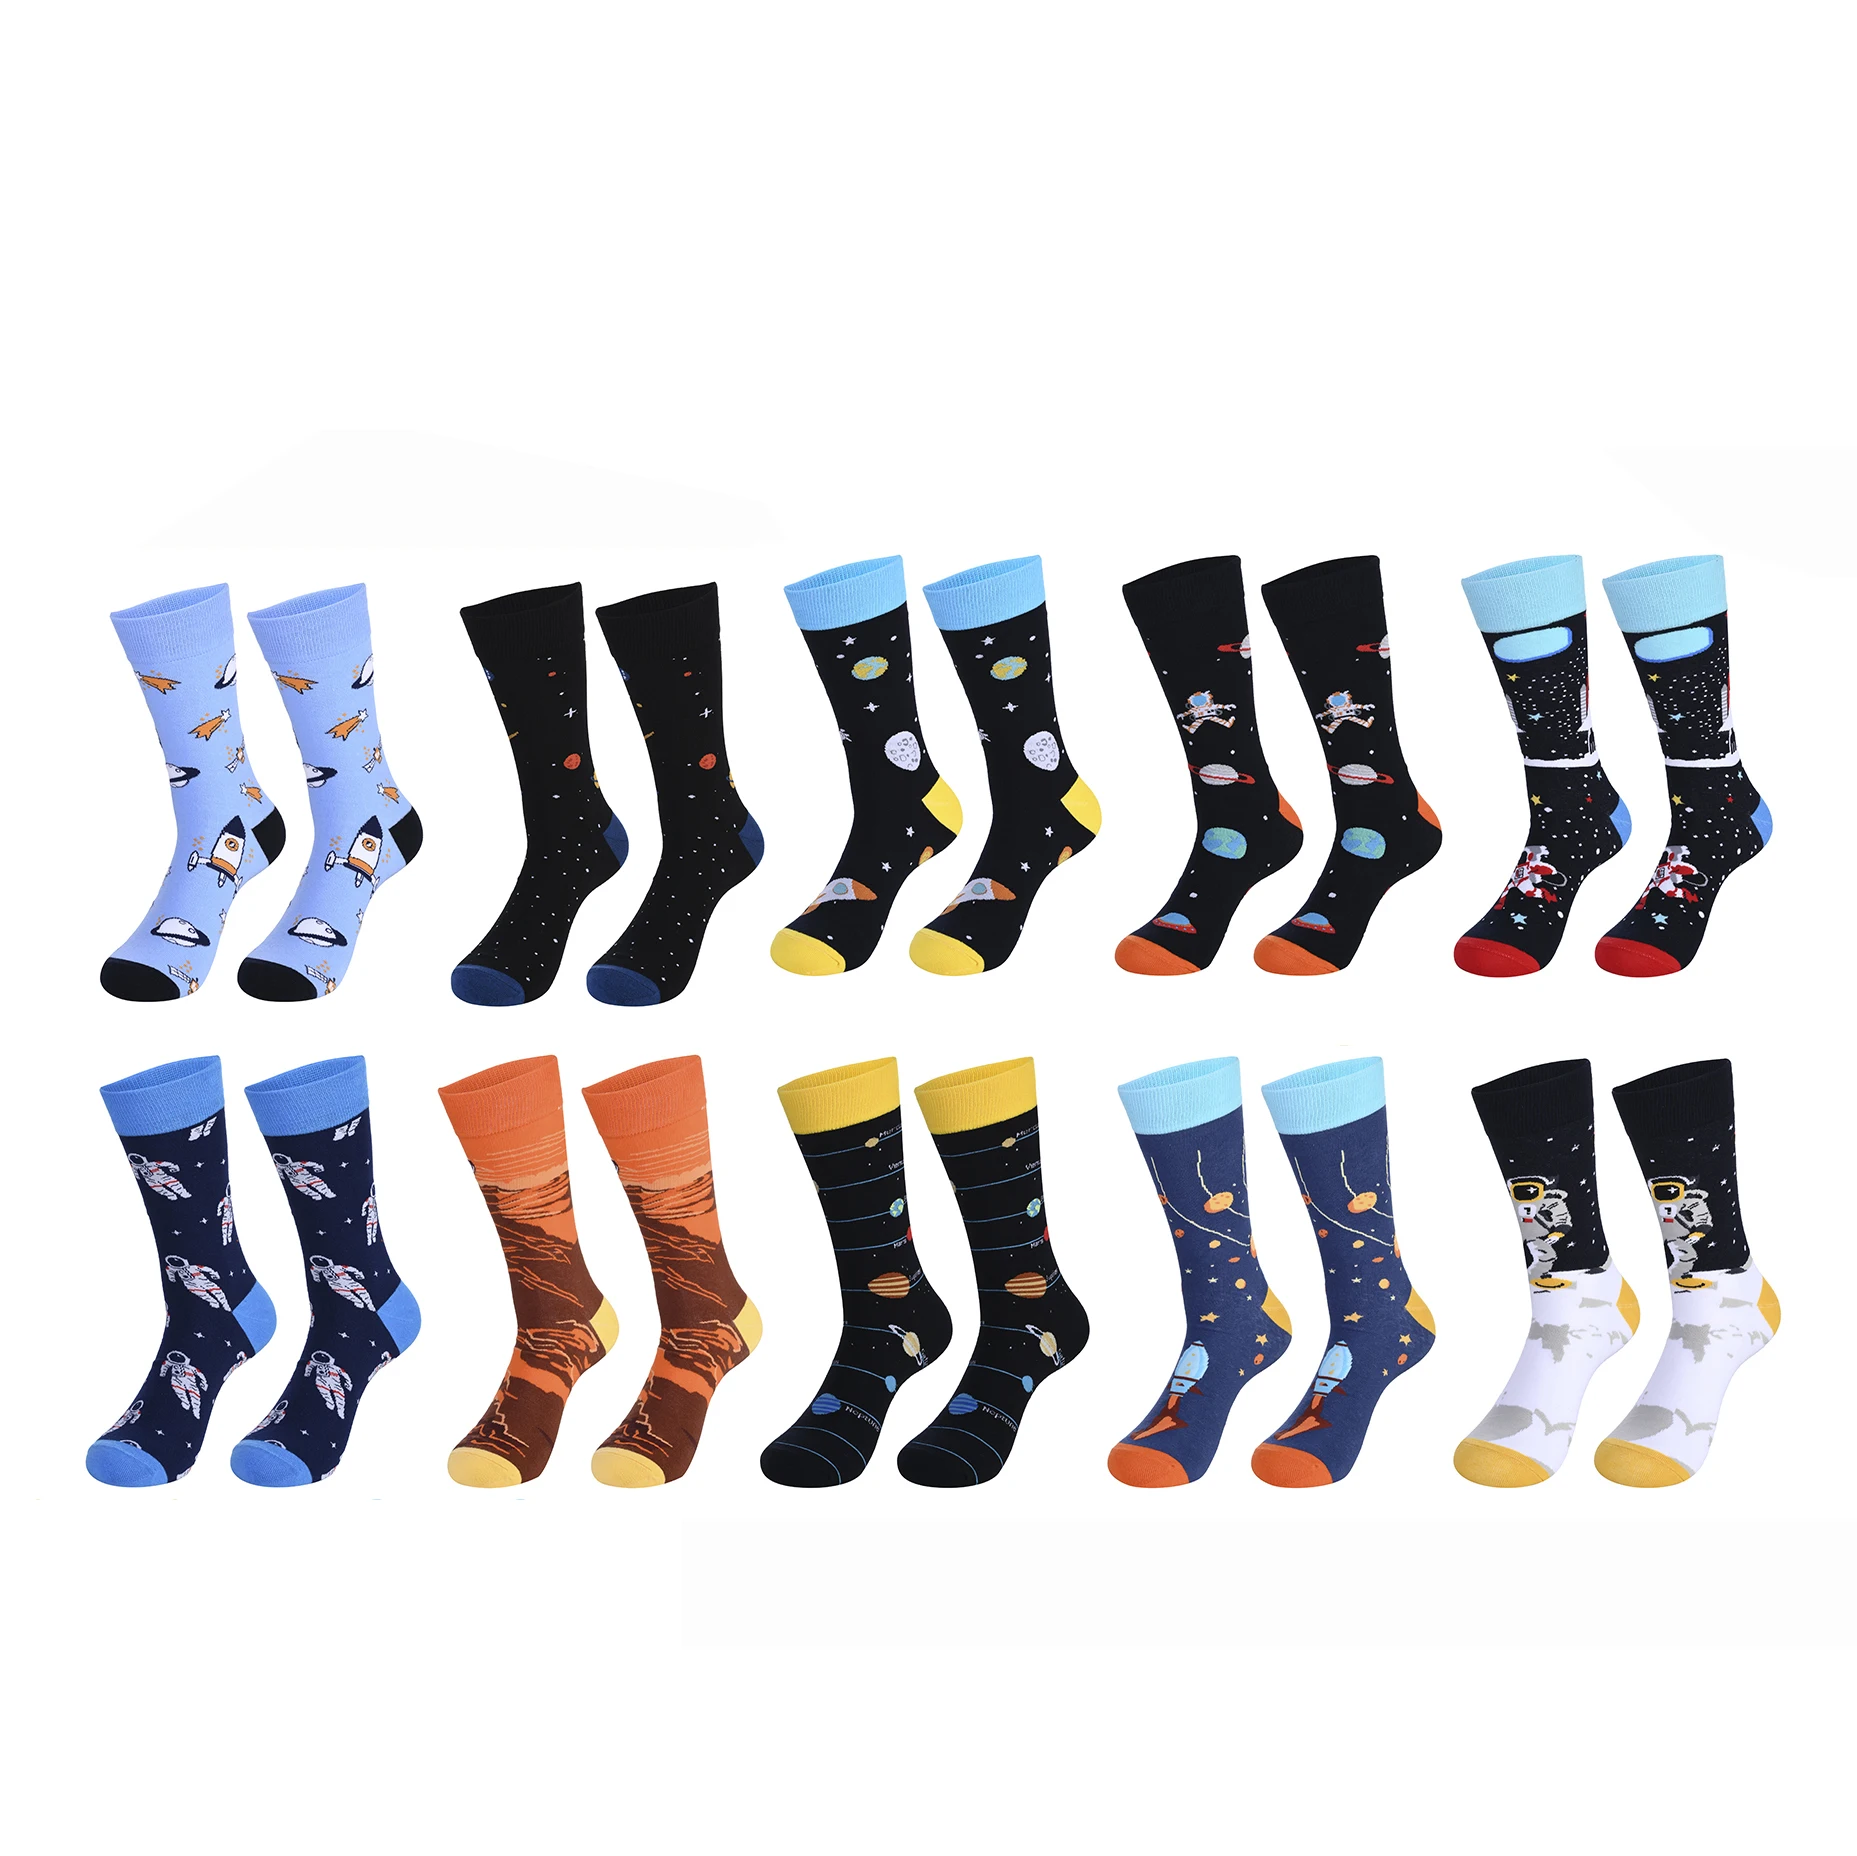 10 pairs of men's and women's socks Aerospace astronaut cool socks Winter skating funny socks Tall sports casual socks hip hop